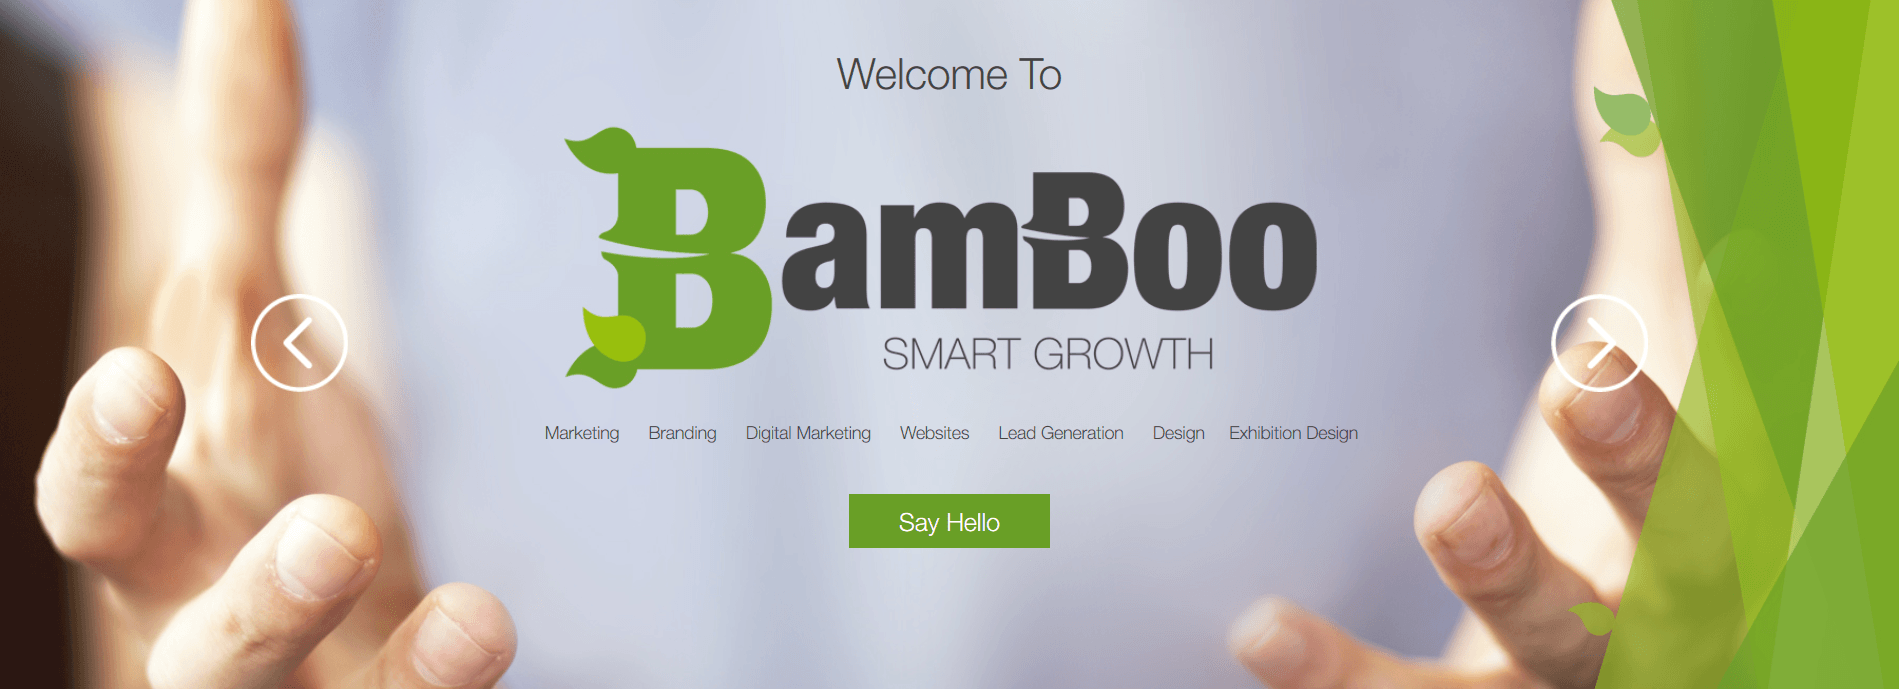 Bamboo Money Logo - BamBoo Smart Growth the BamBoo man